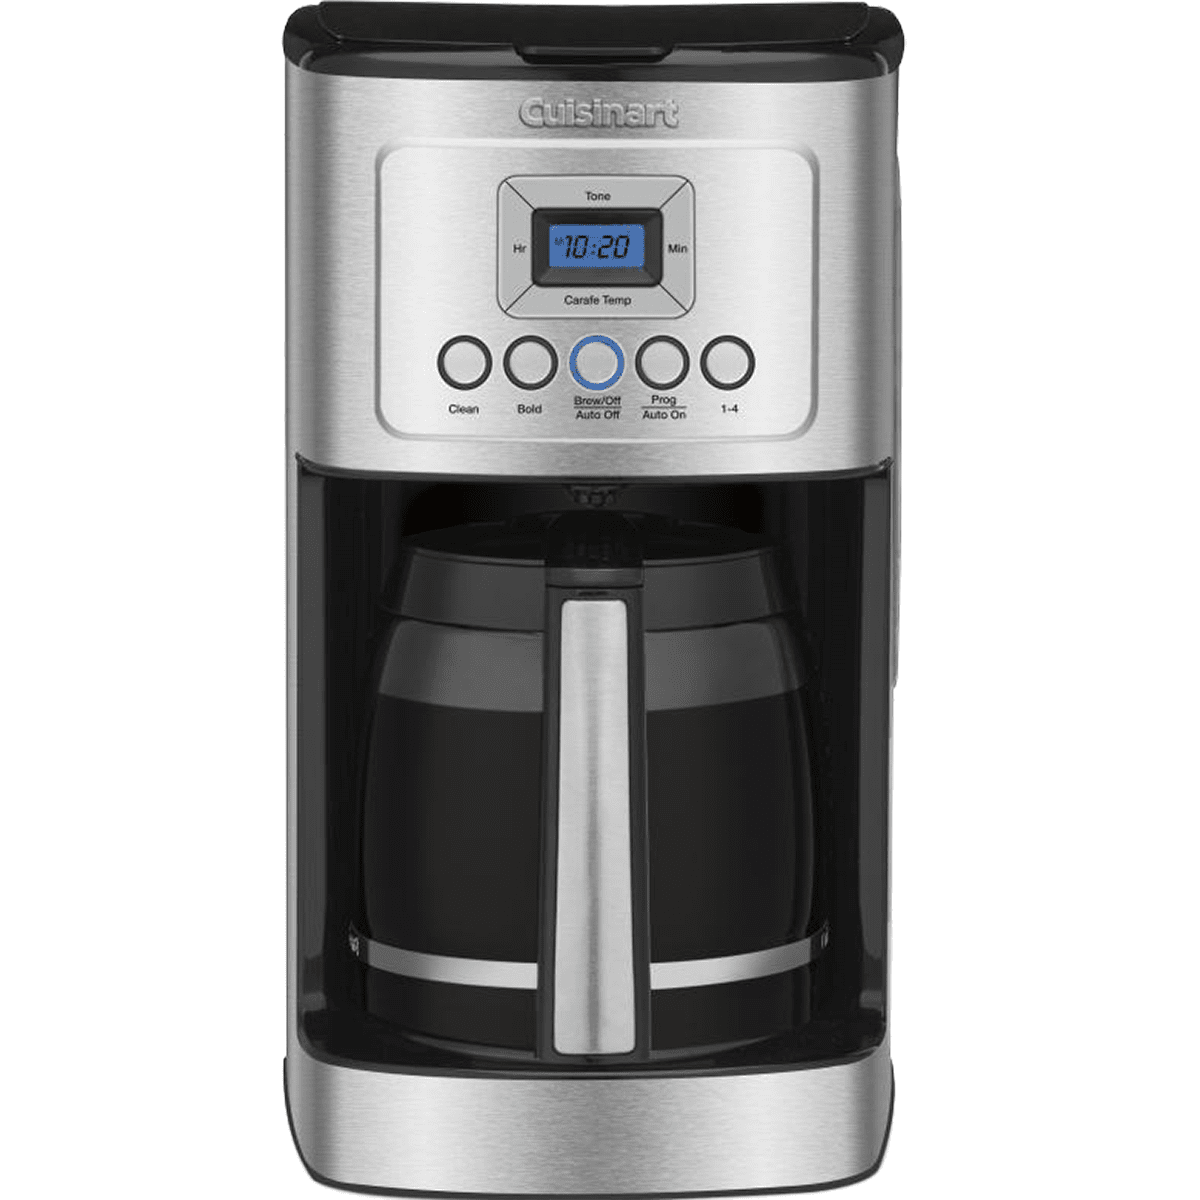 Cuisinart 14 Cup Programmable Coffee Maker - Black (DCC-3200)